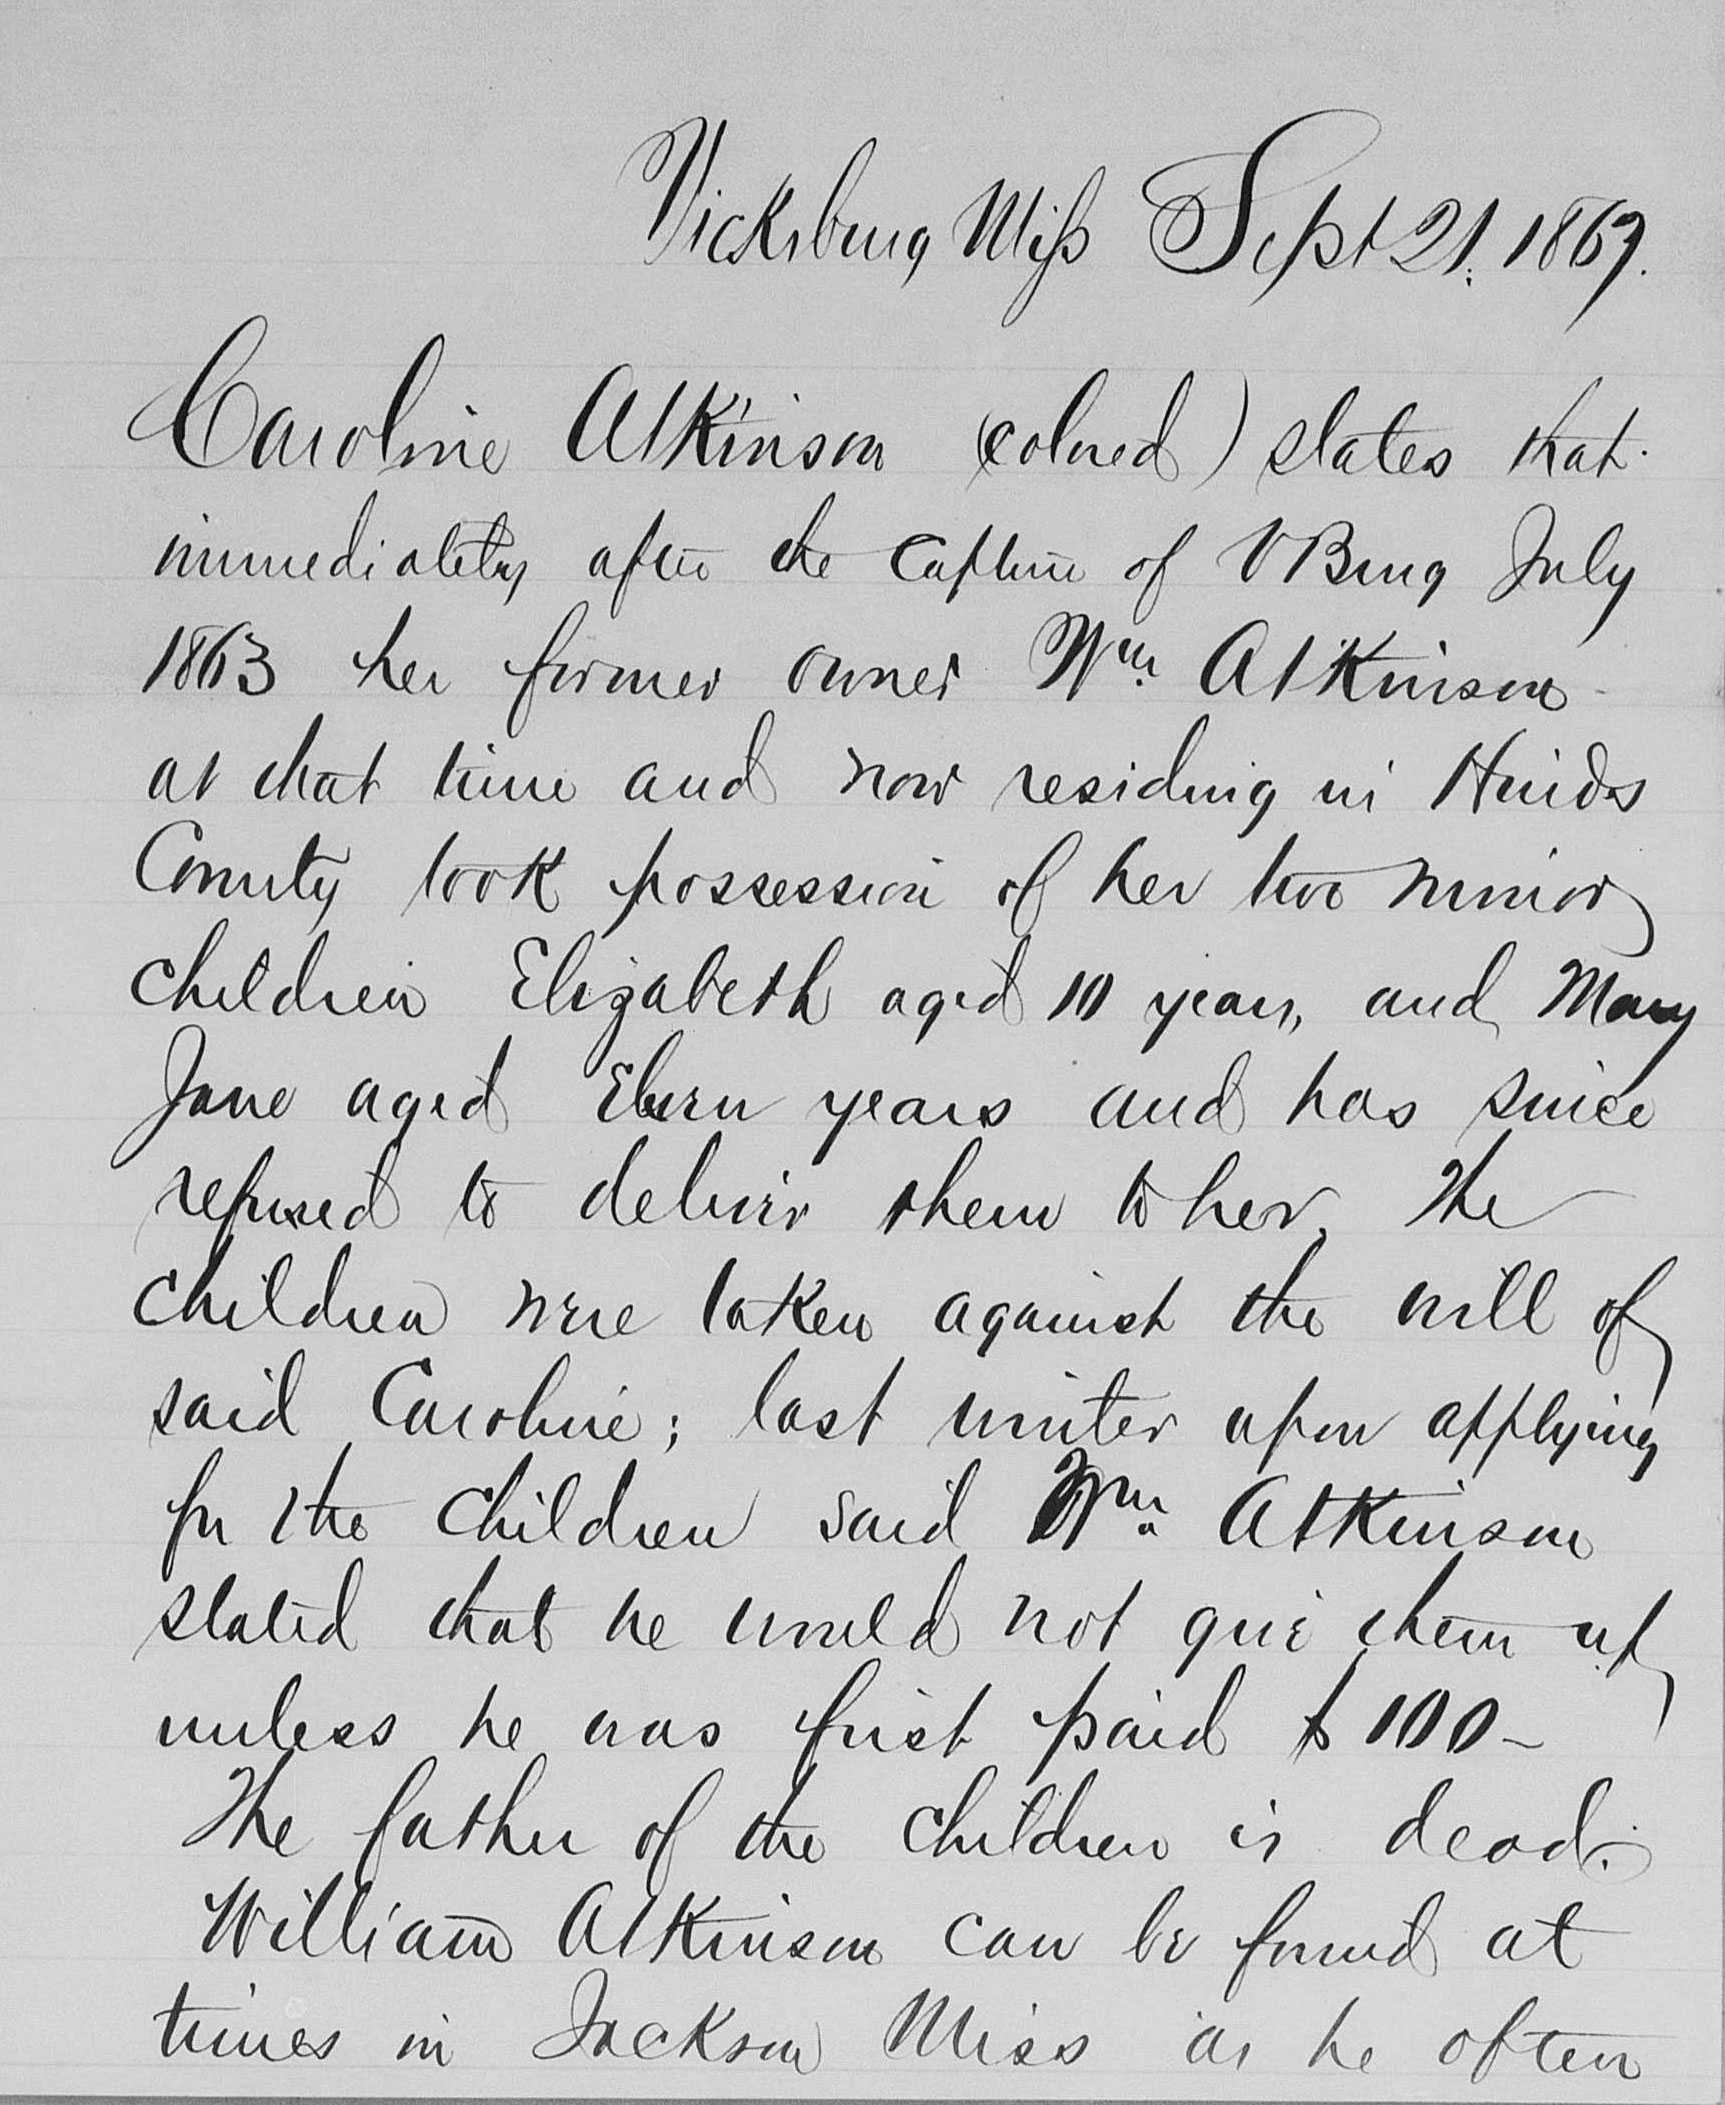 A handwritten letter from Caroline Atkinson's Statement to the Freedmen's Bureau.